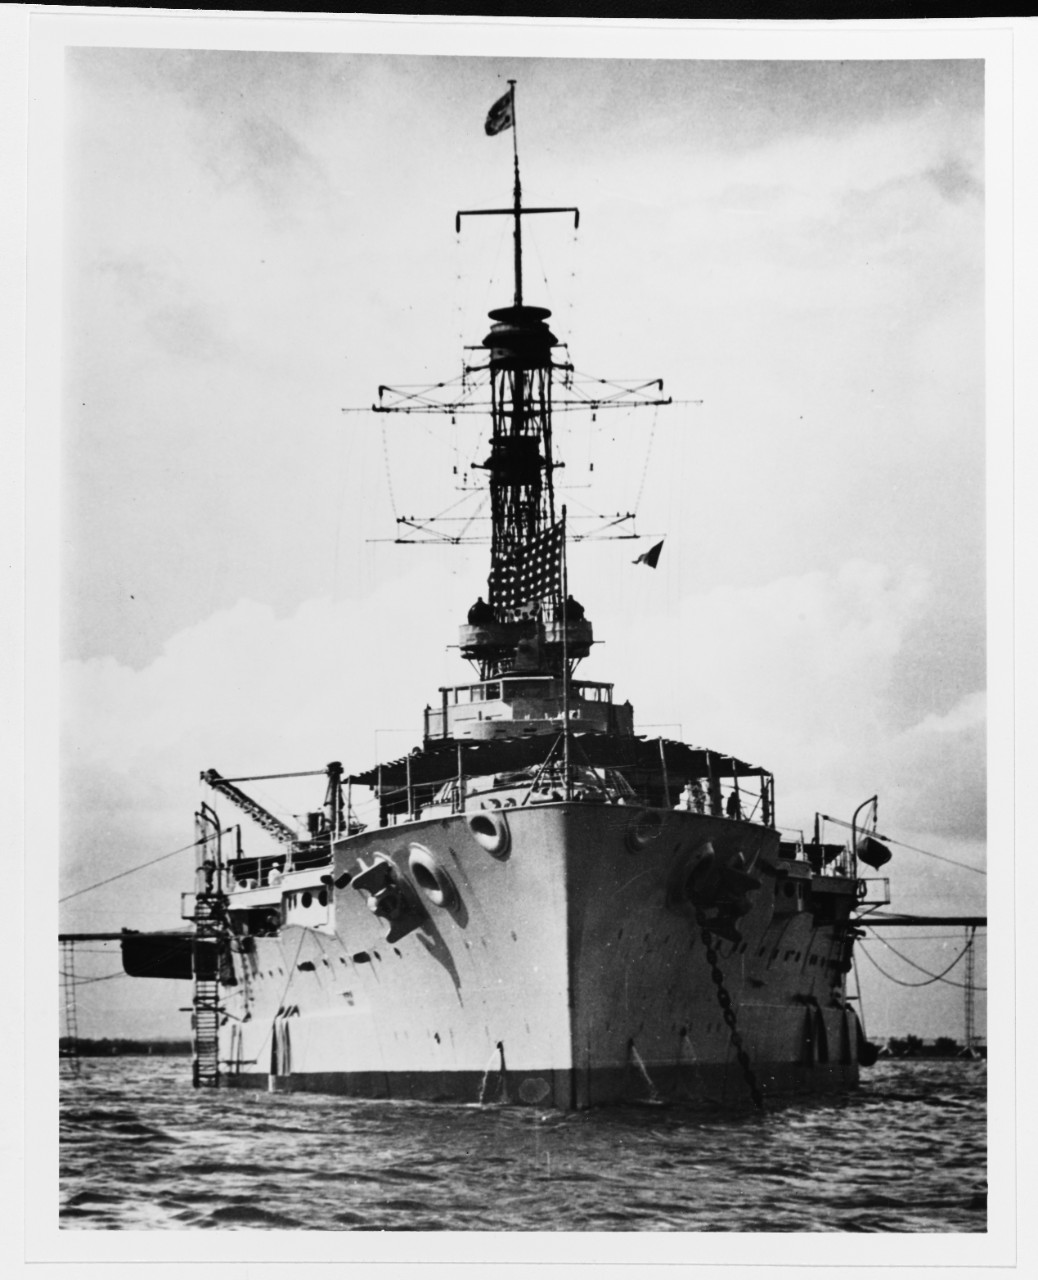 USS NEVADA (BB-36)